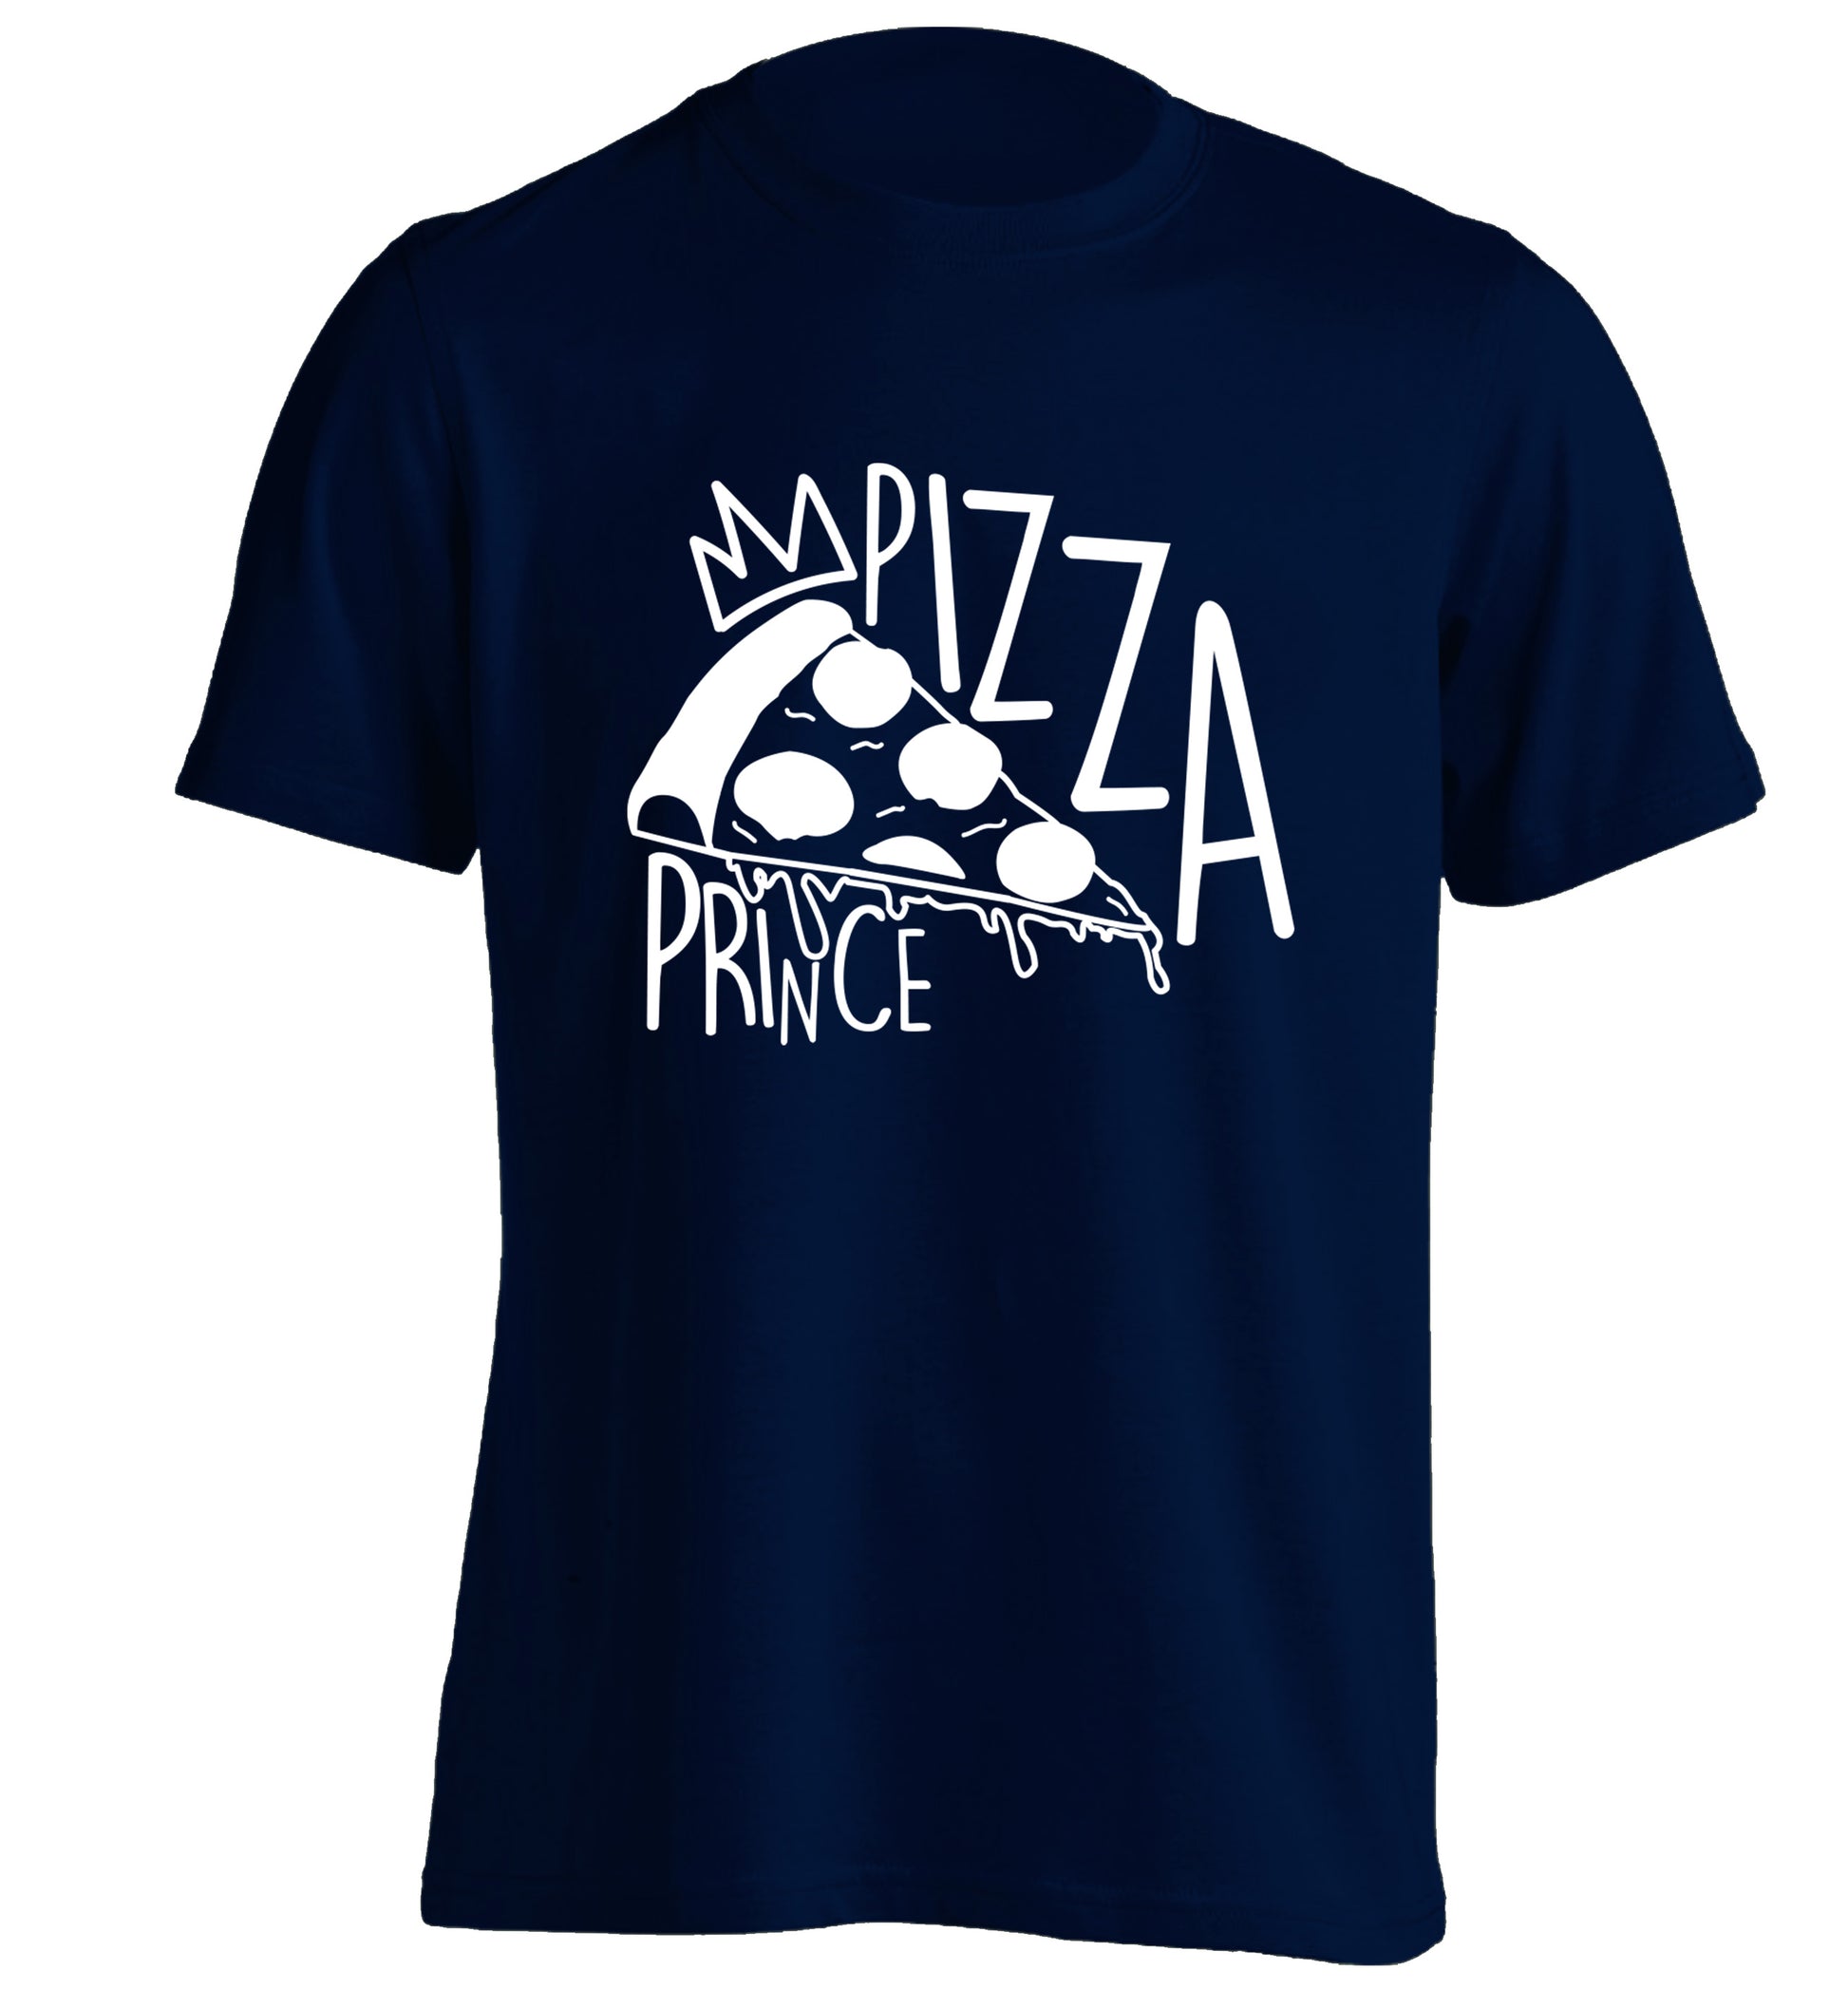 Pizza Prince adults unisex navy Tshirt 2XL